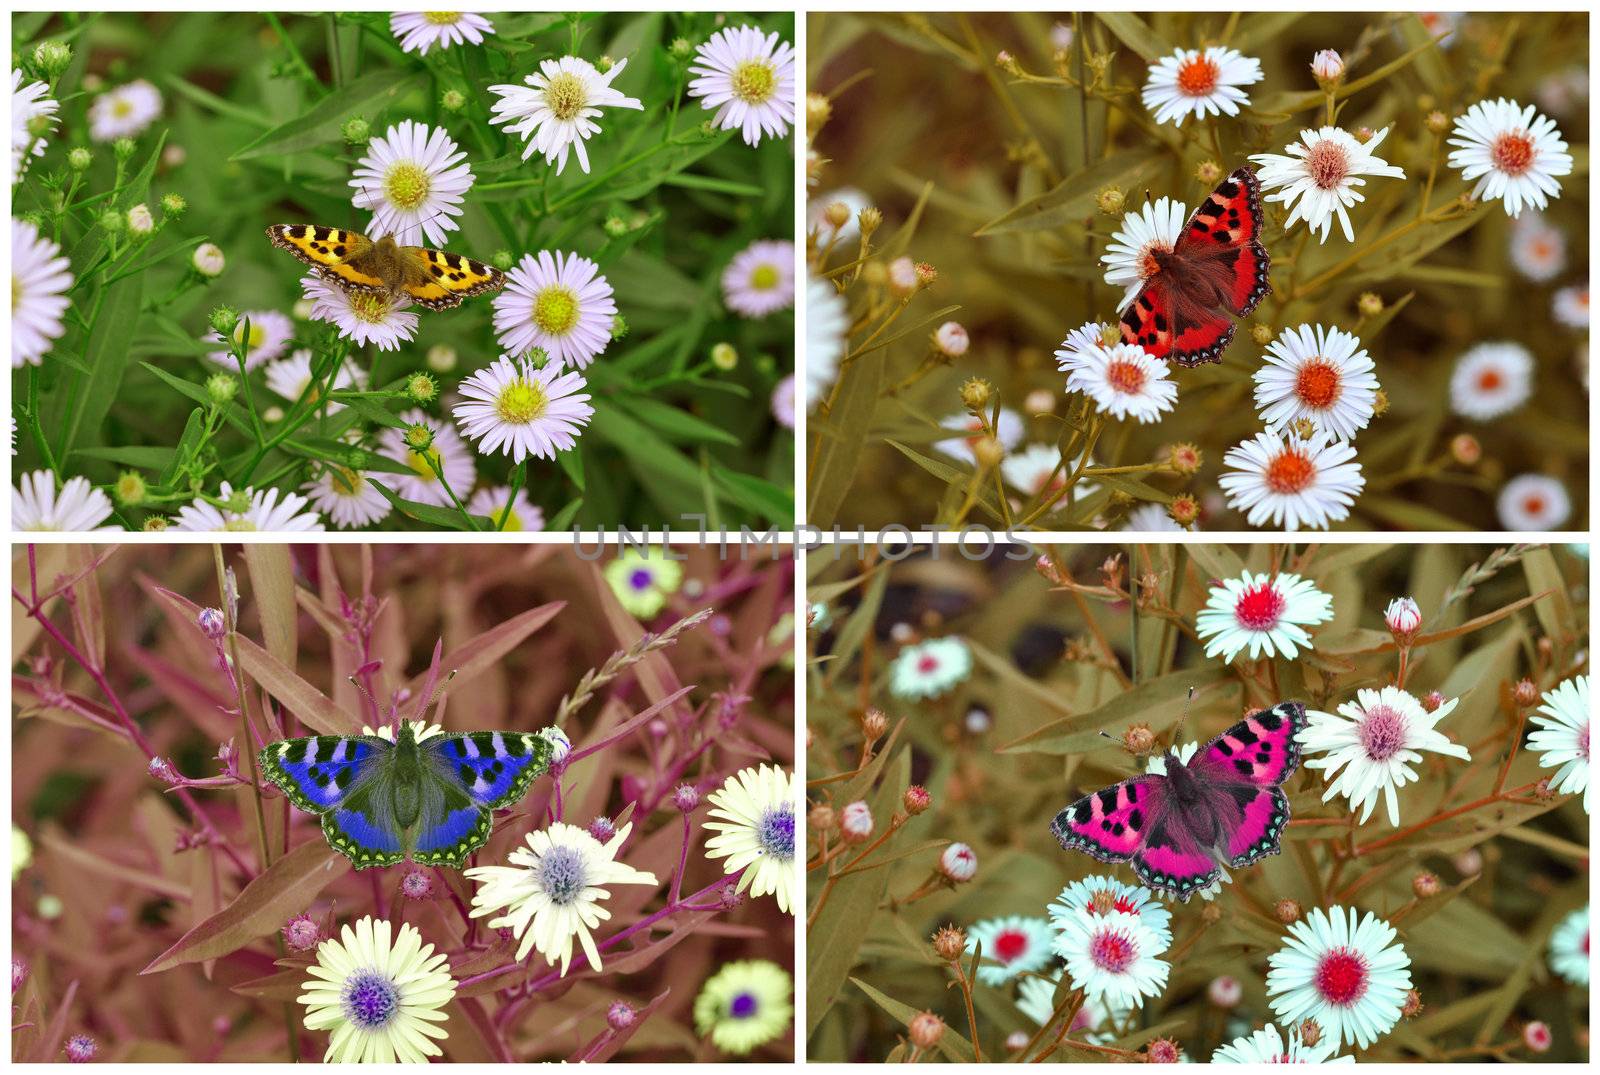 Colorful butterflies in the summer garden flowers